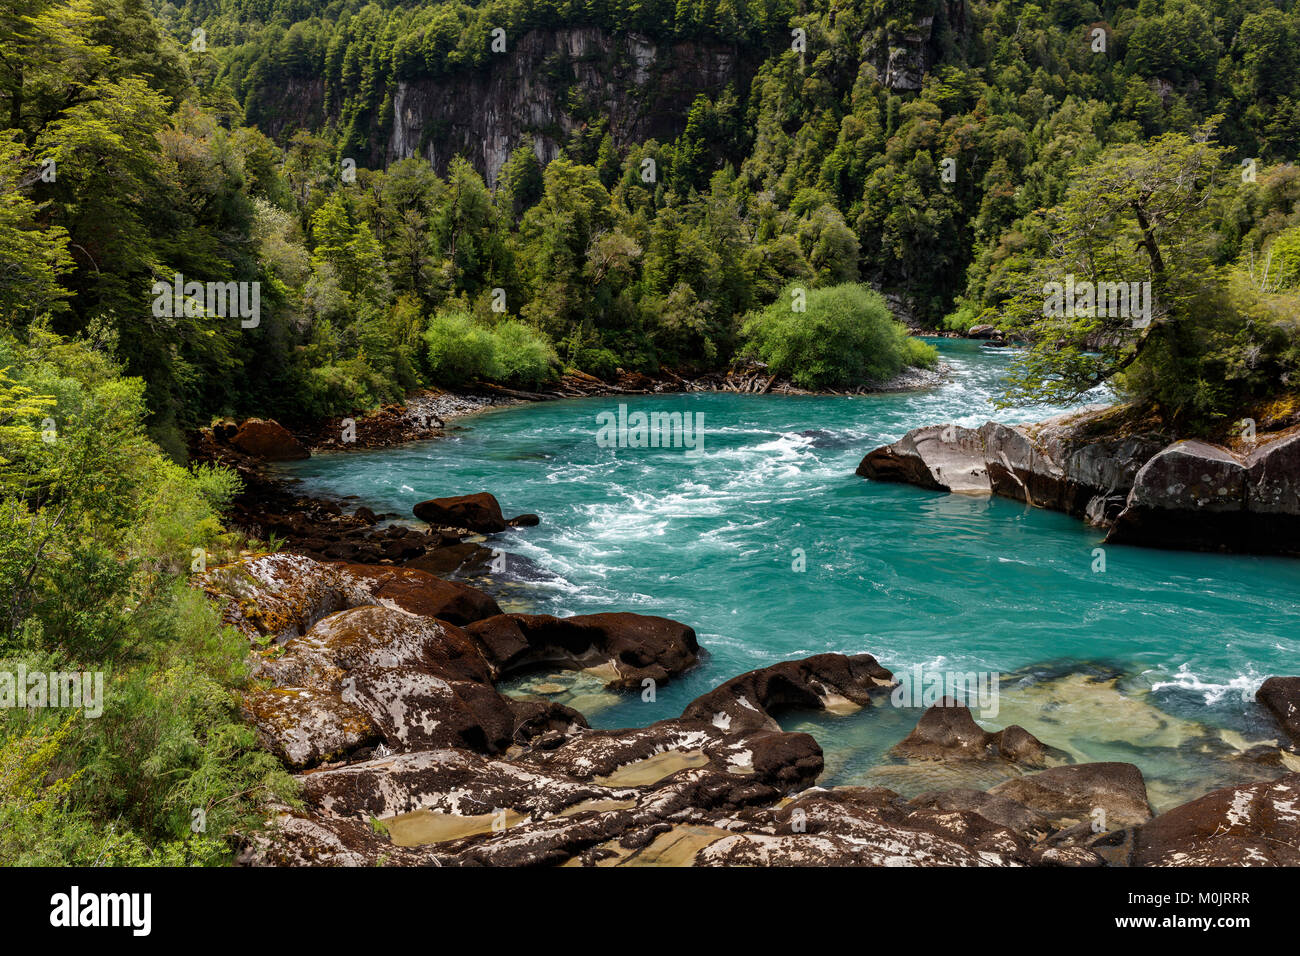 Turquoise mountain river Futalefu flows through dense vegetation, National Park Los Alerces, Region de los Lagos, Patagonia Stock Photo